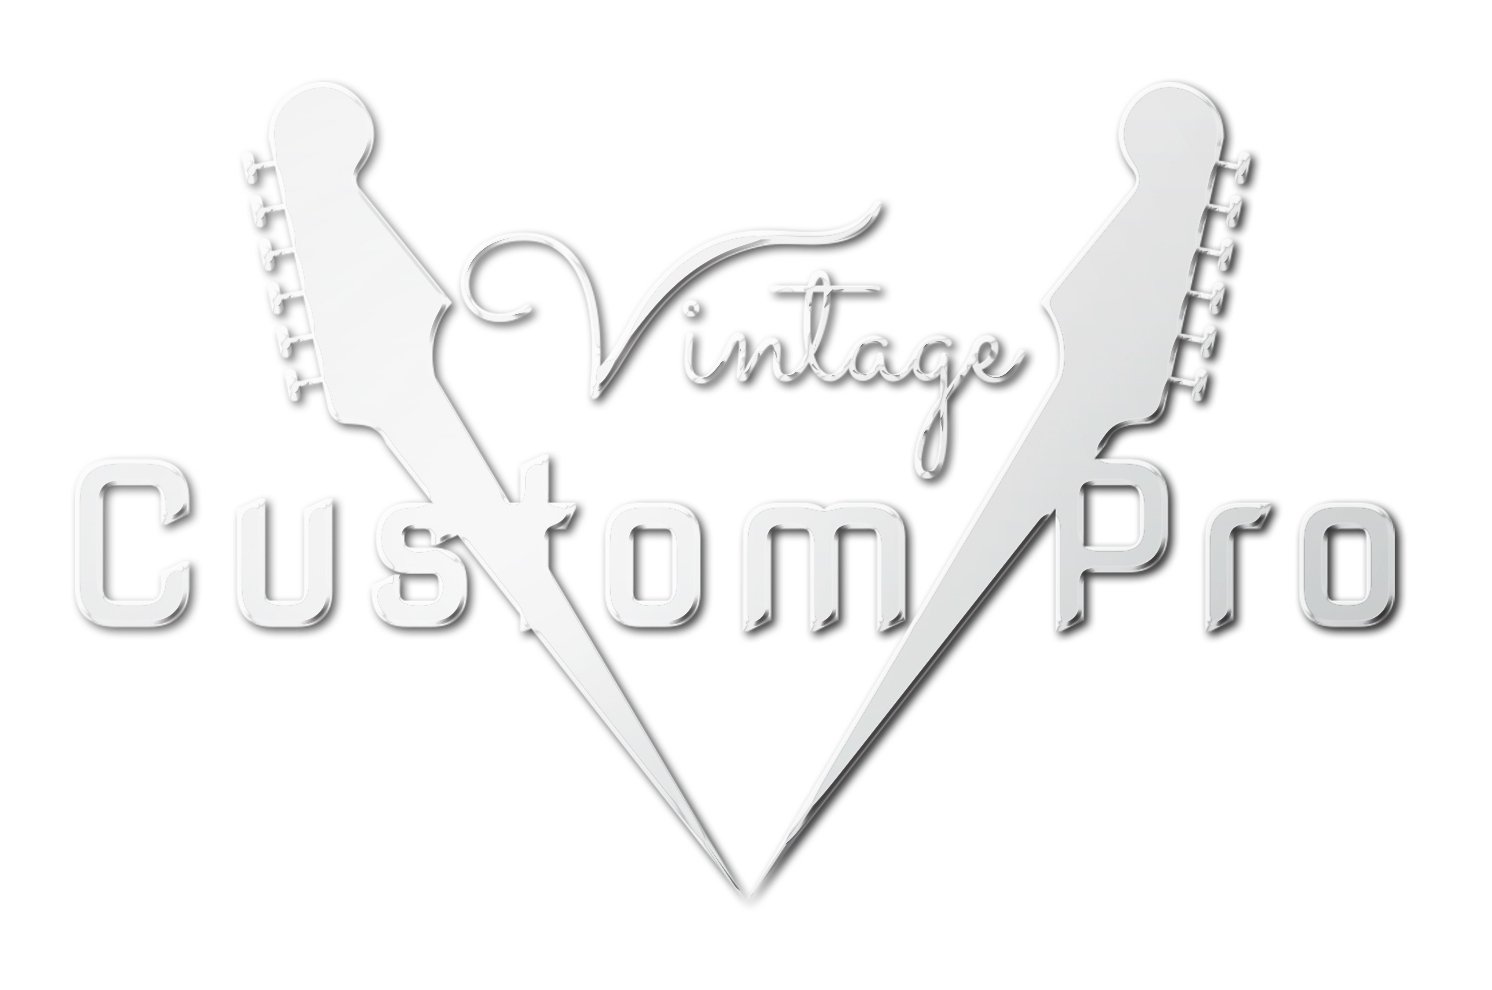 Vintage* LV6SSB Electric Guitar, Electric Guitar for sale at Richards Guitars.